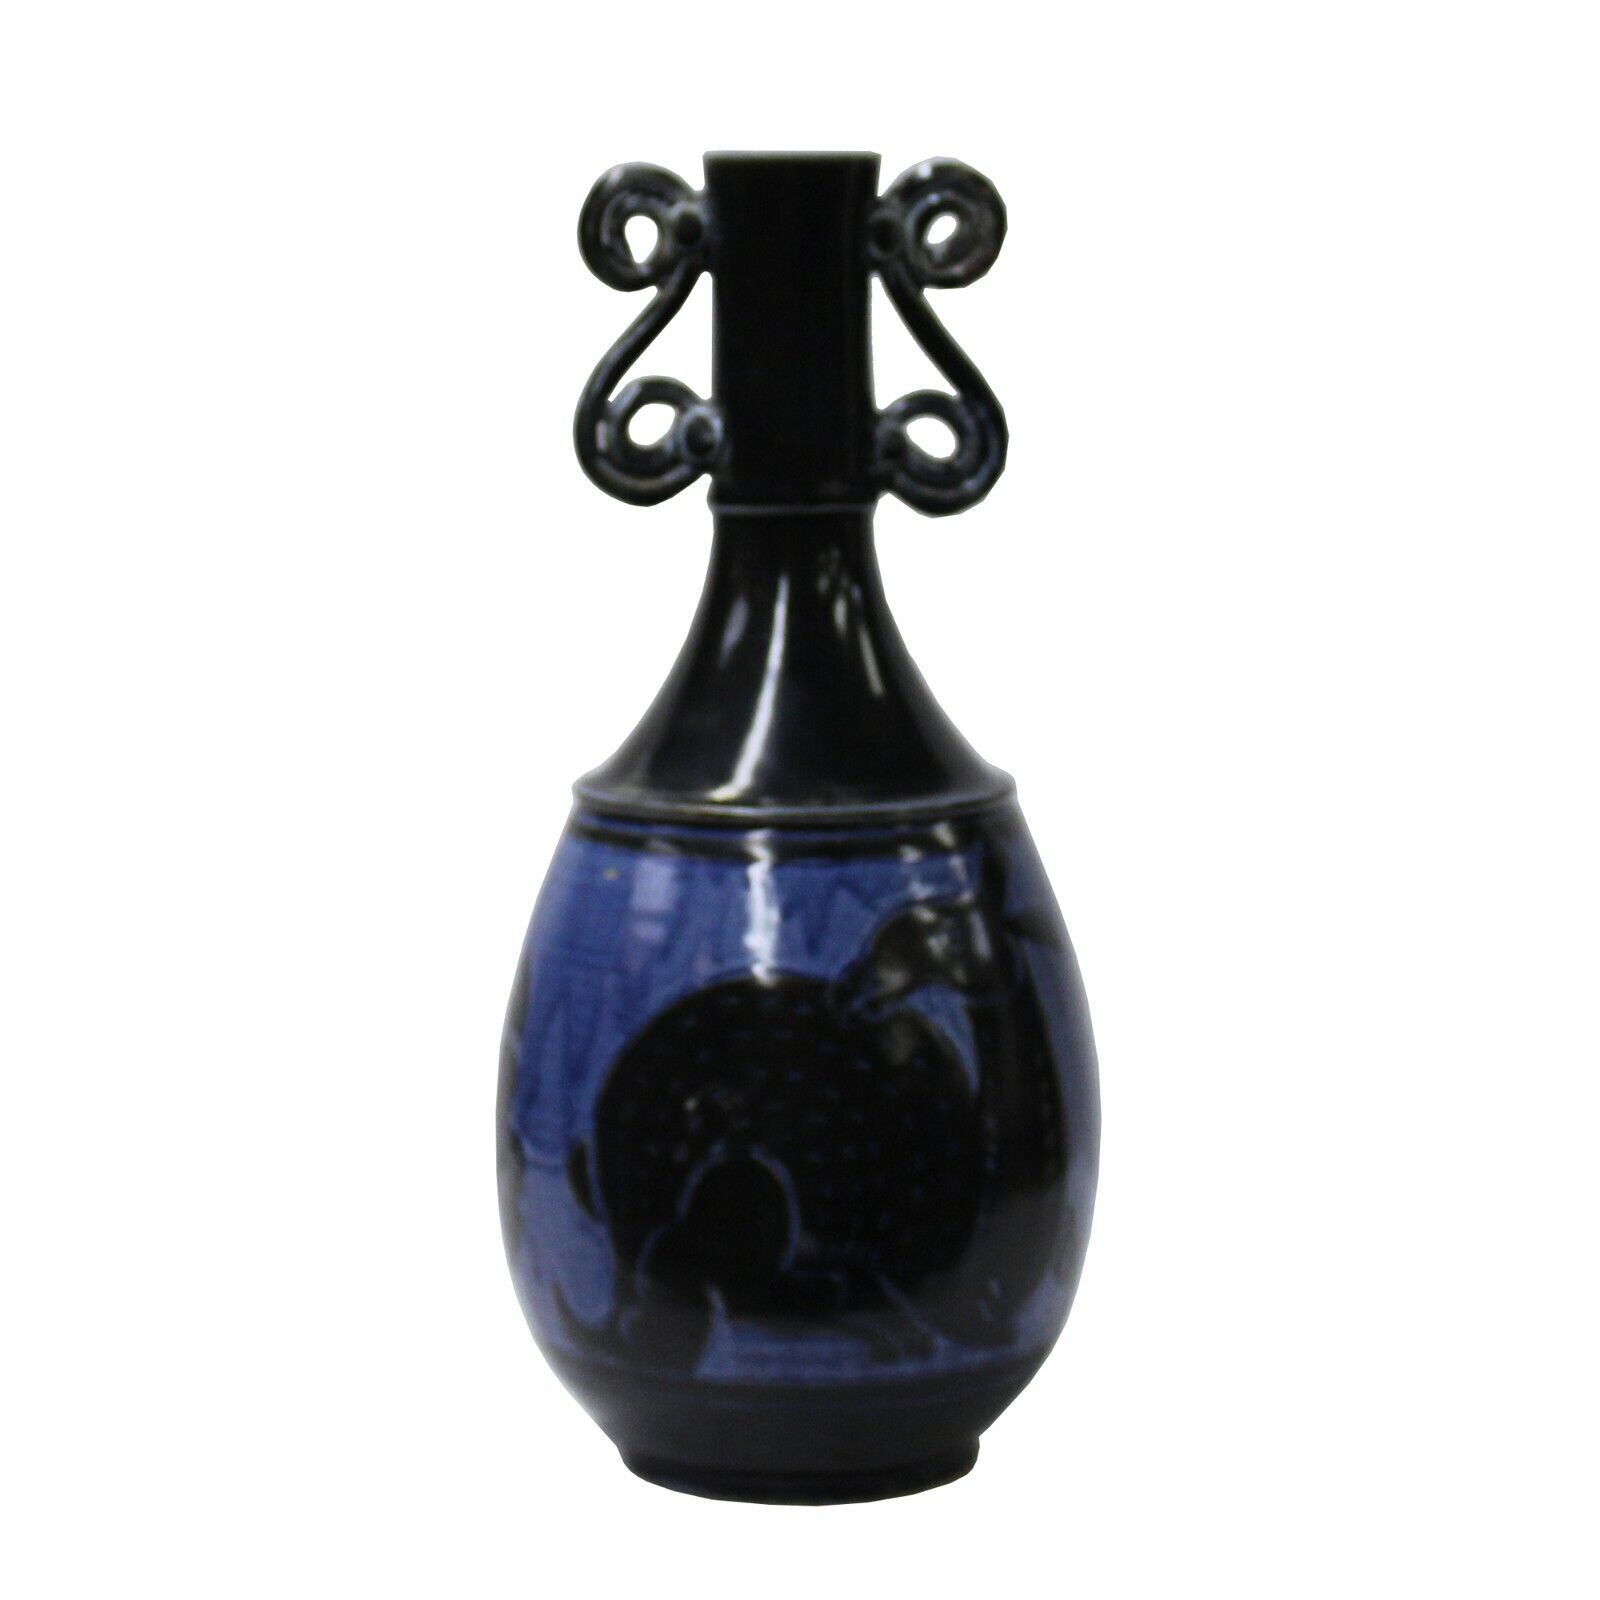 Chinese Ware Black Blue Glaze Ceramic Jar Vase Display Art cs5653